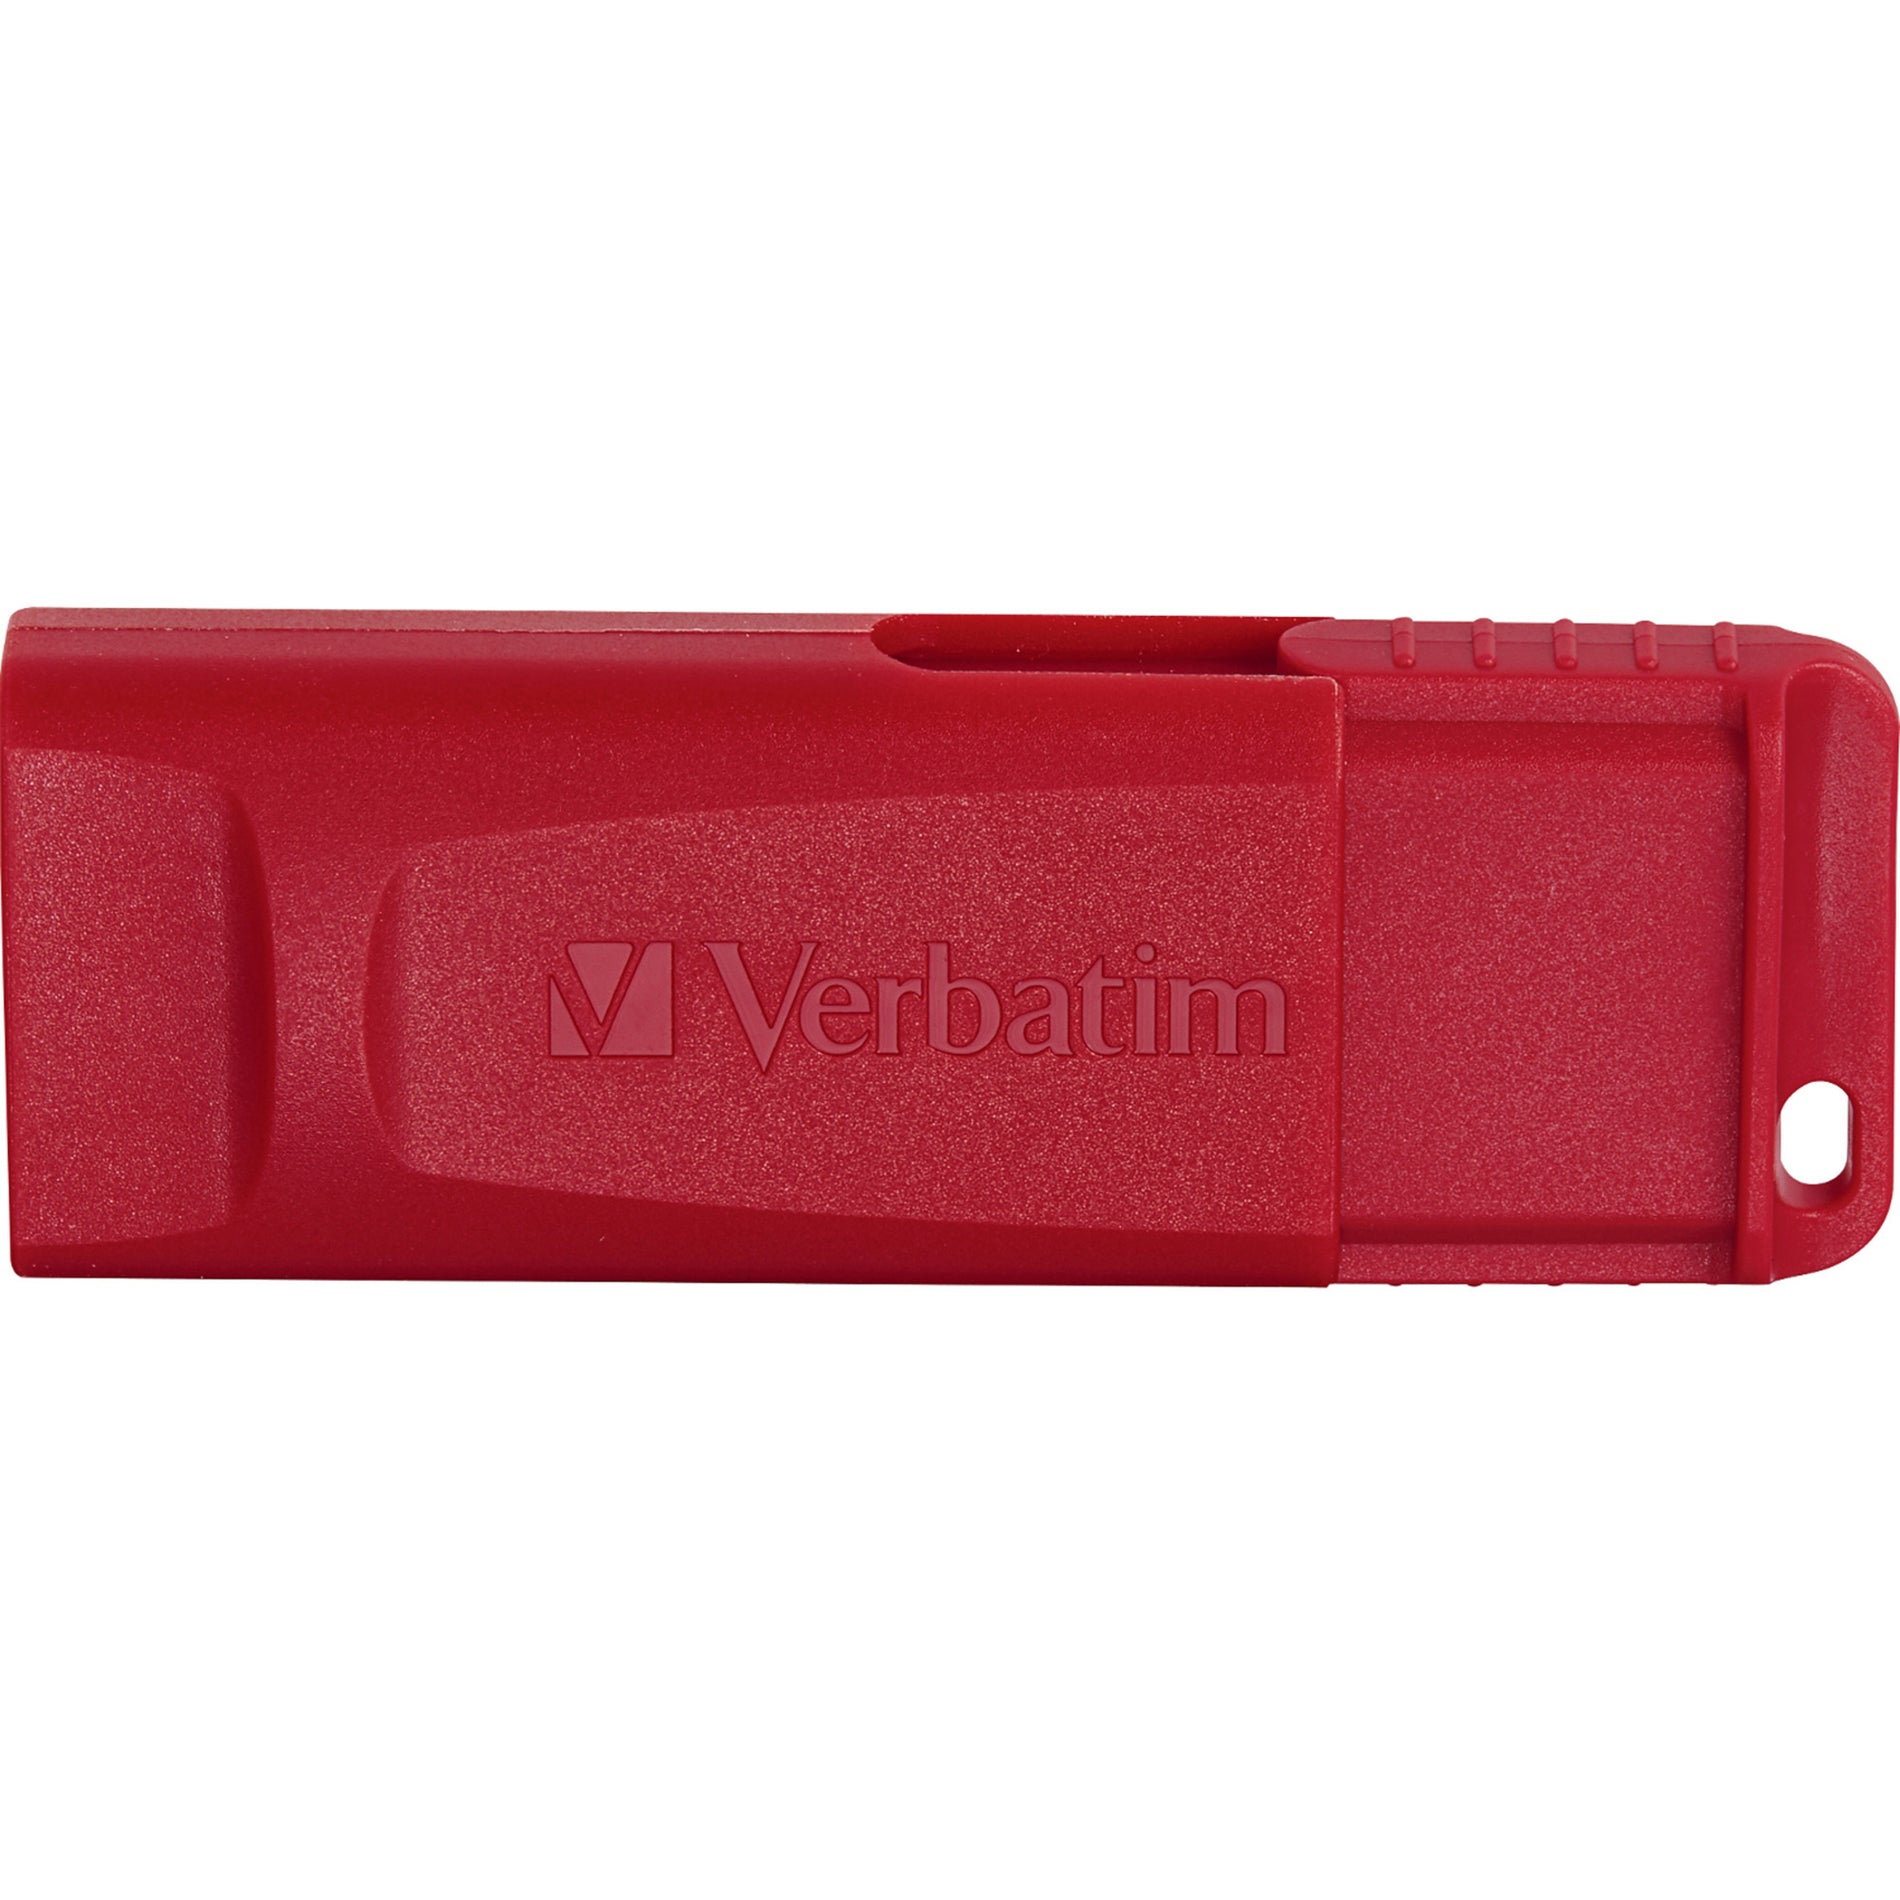 Microban 98525 Store 'n' Go USB Flash Drive, 128GB, Red